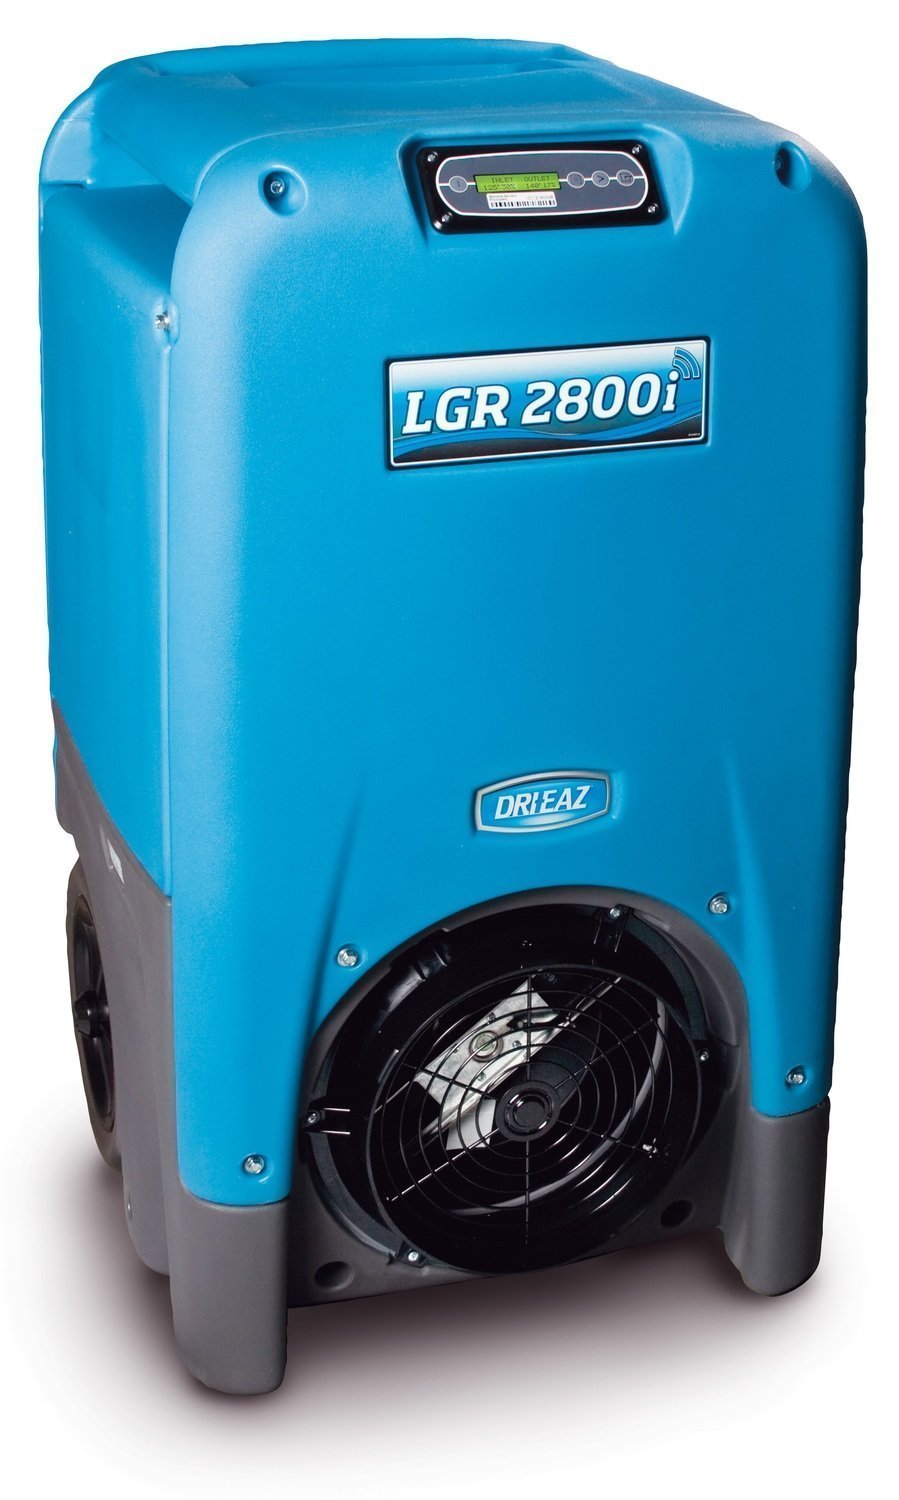 LGR 3800i Dehumidifier by Drieaz F411